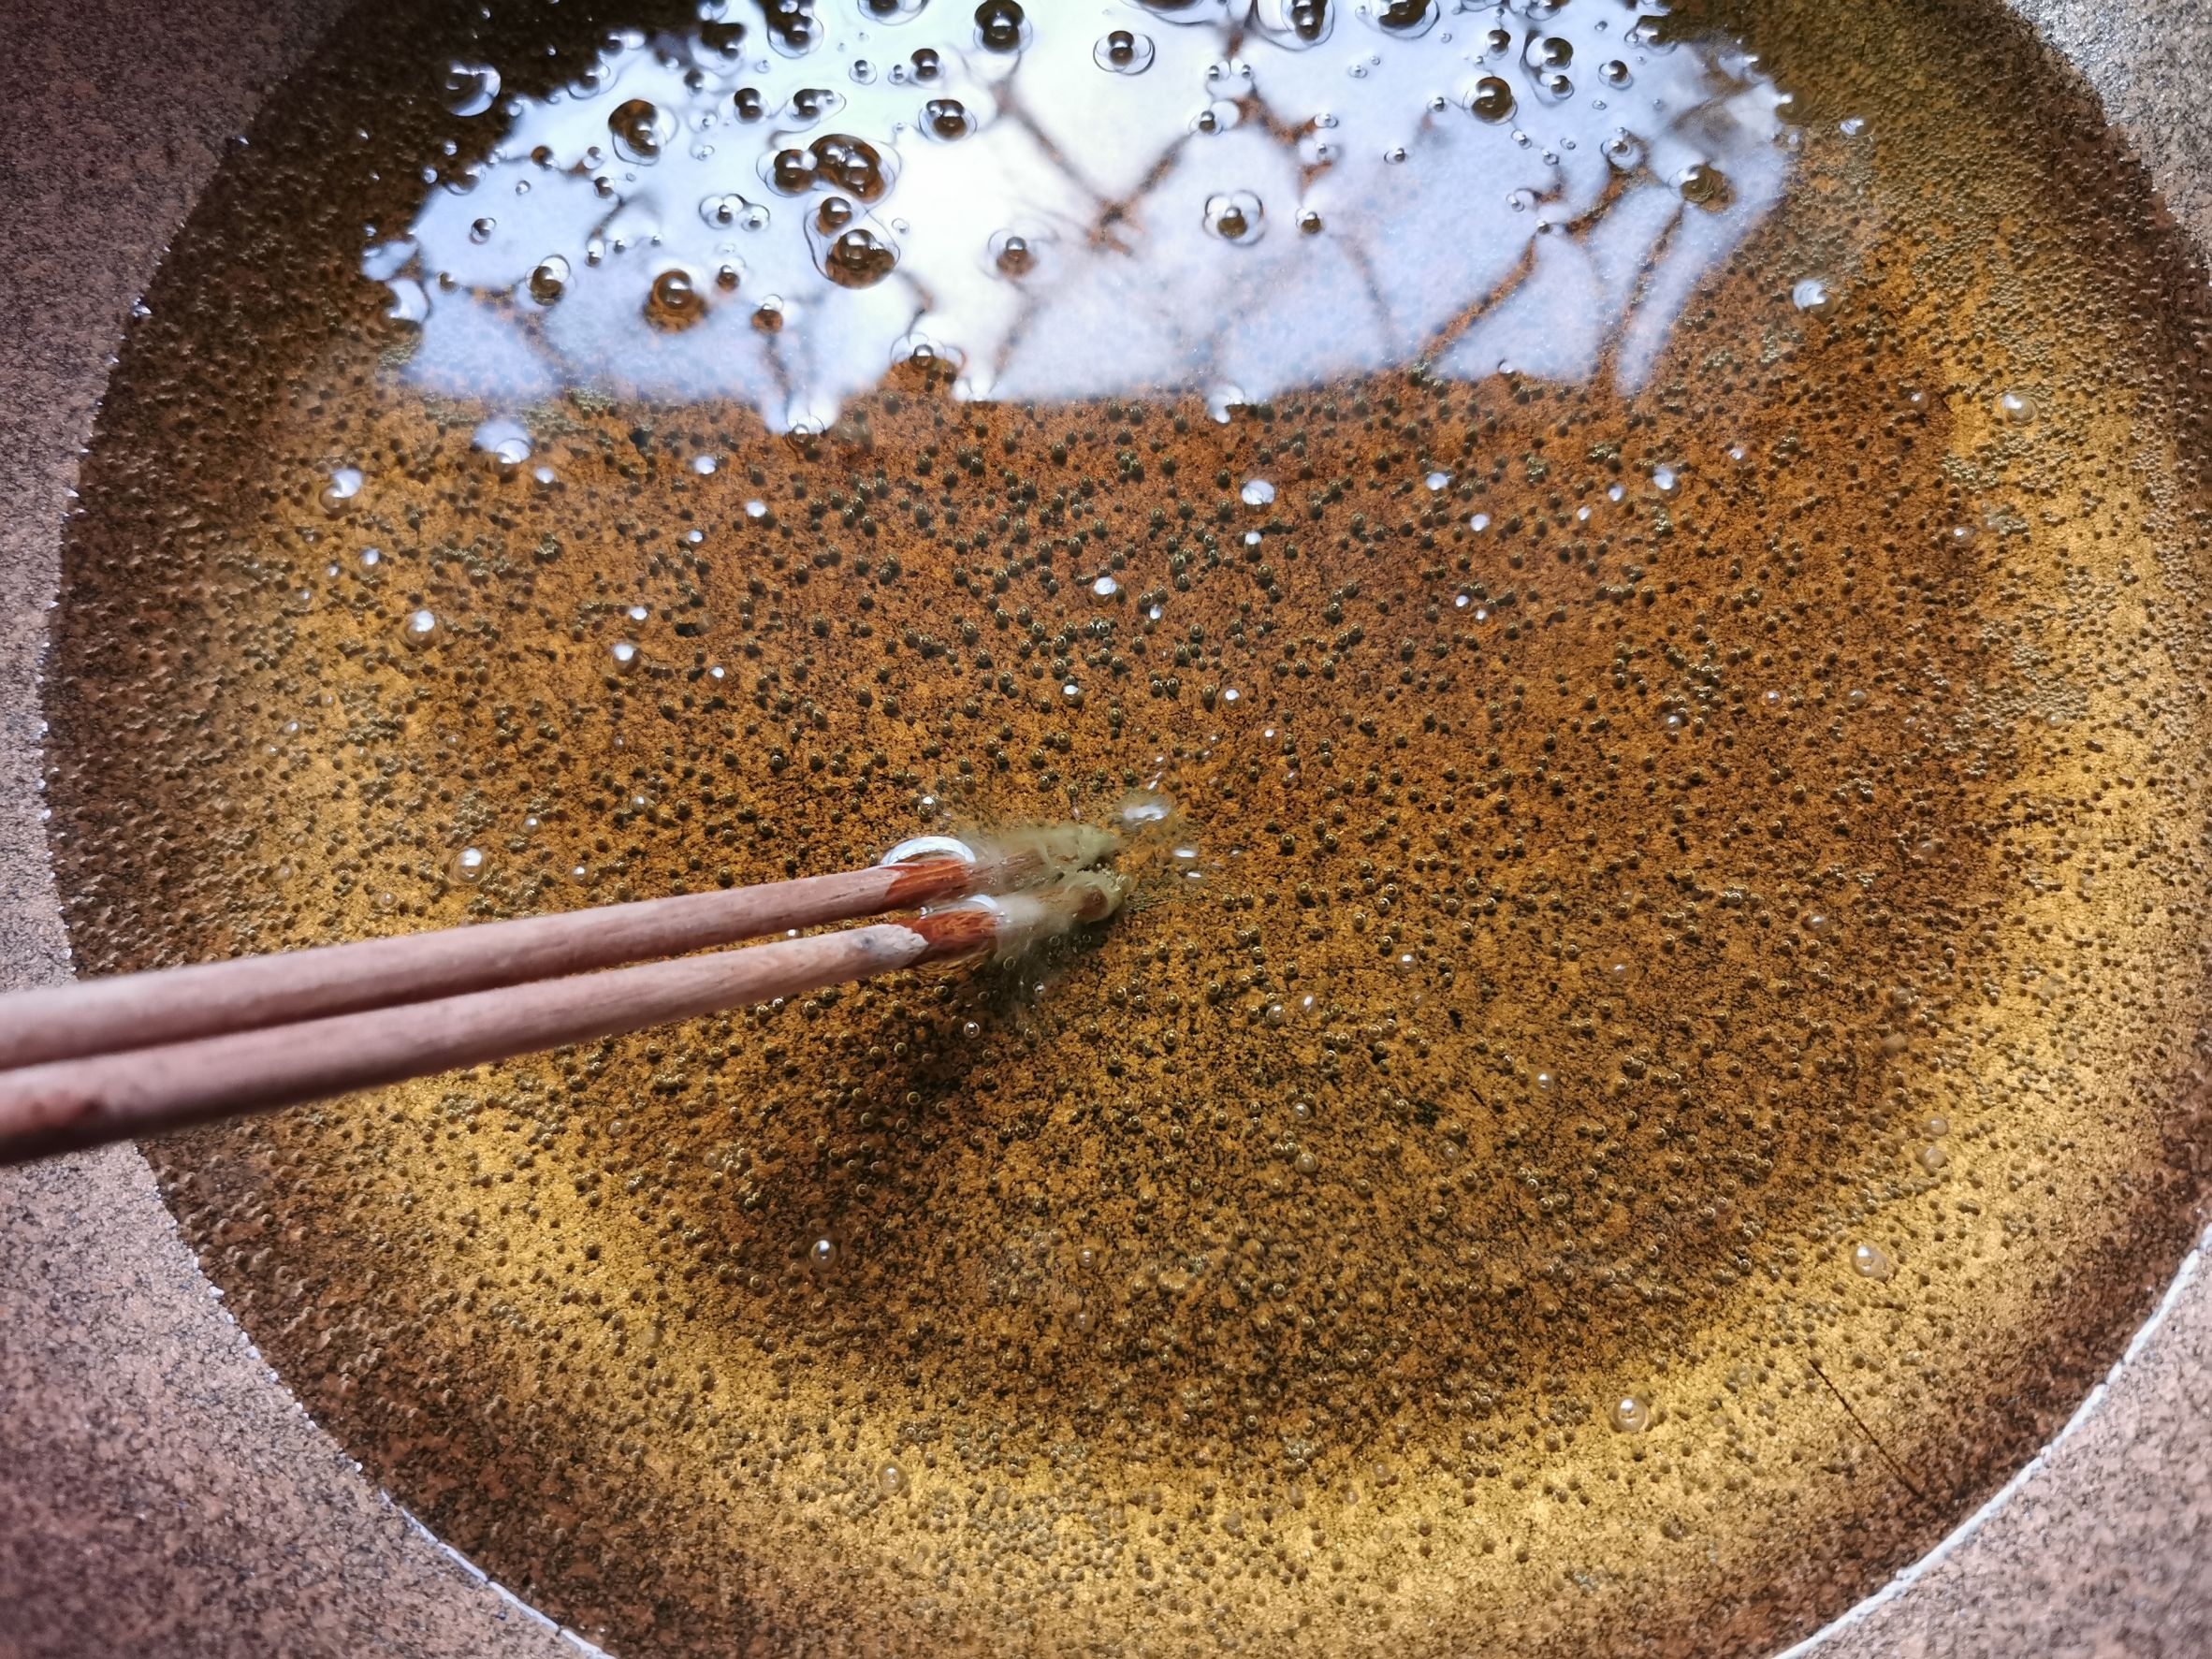 Chopsticks in cooking oil | Source: Shutterstock